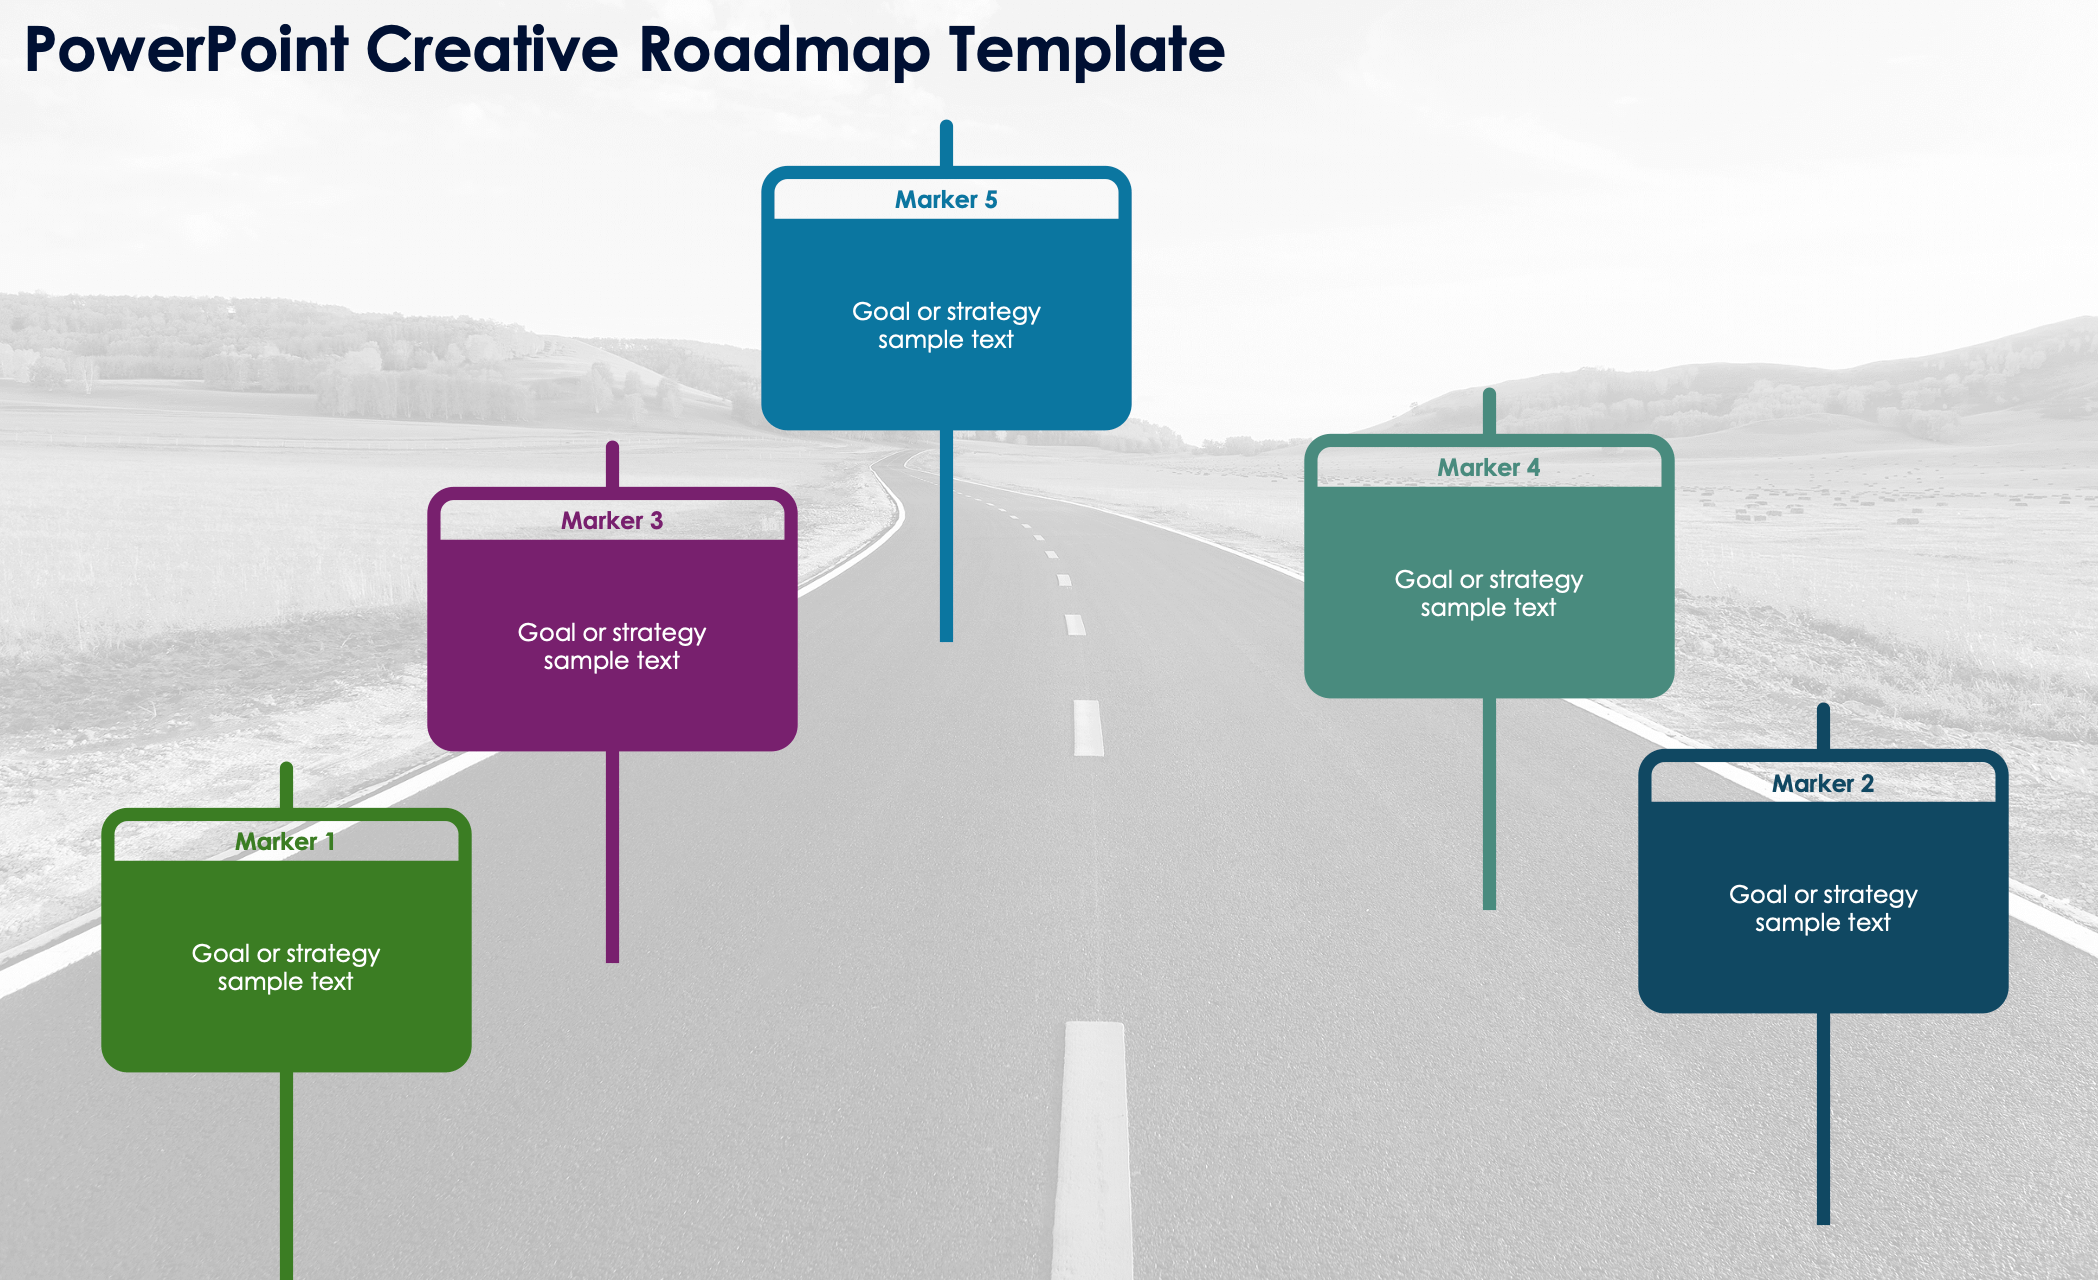 PowerPoint Creative Roadmap Template